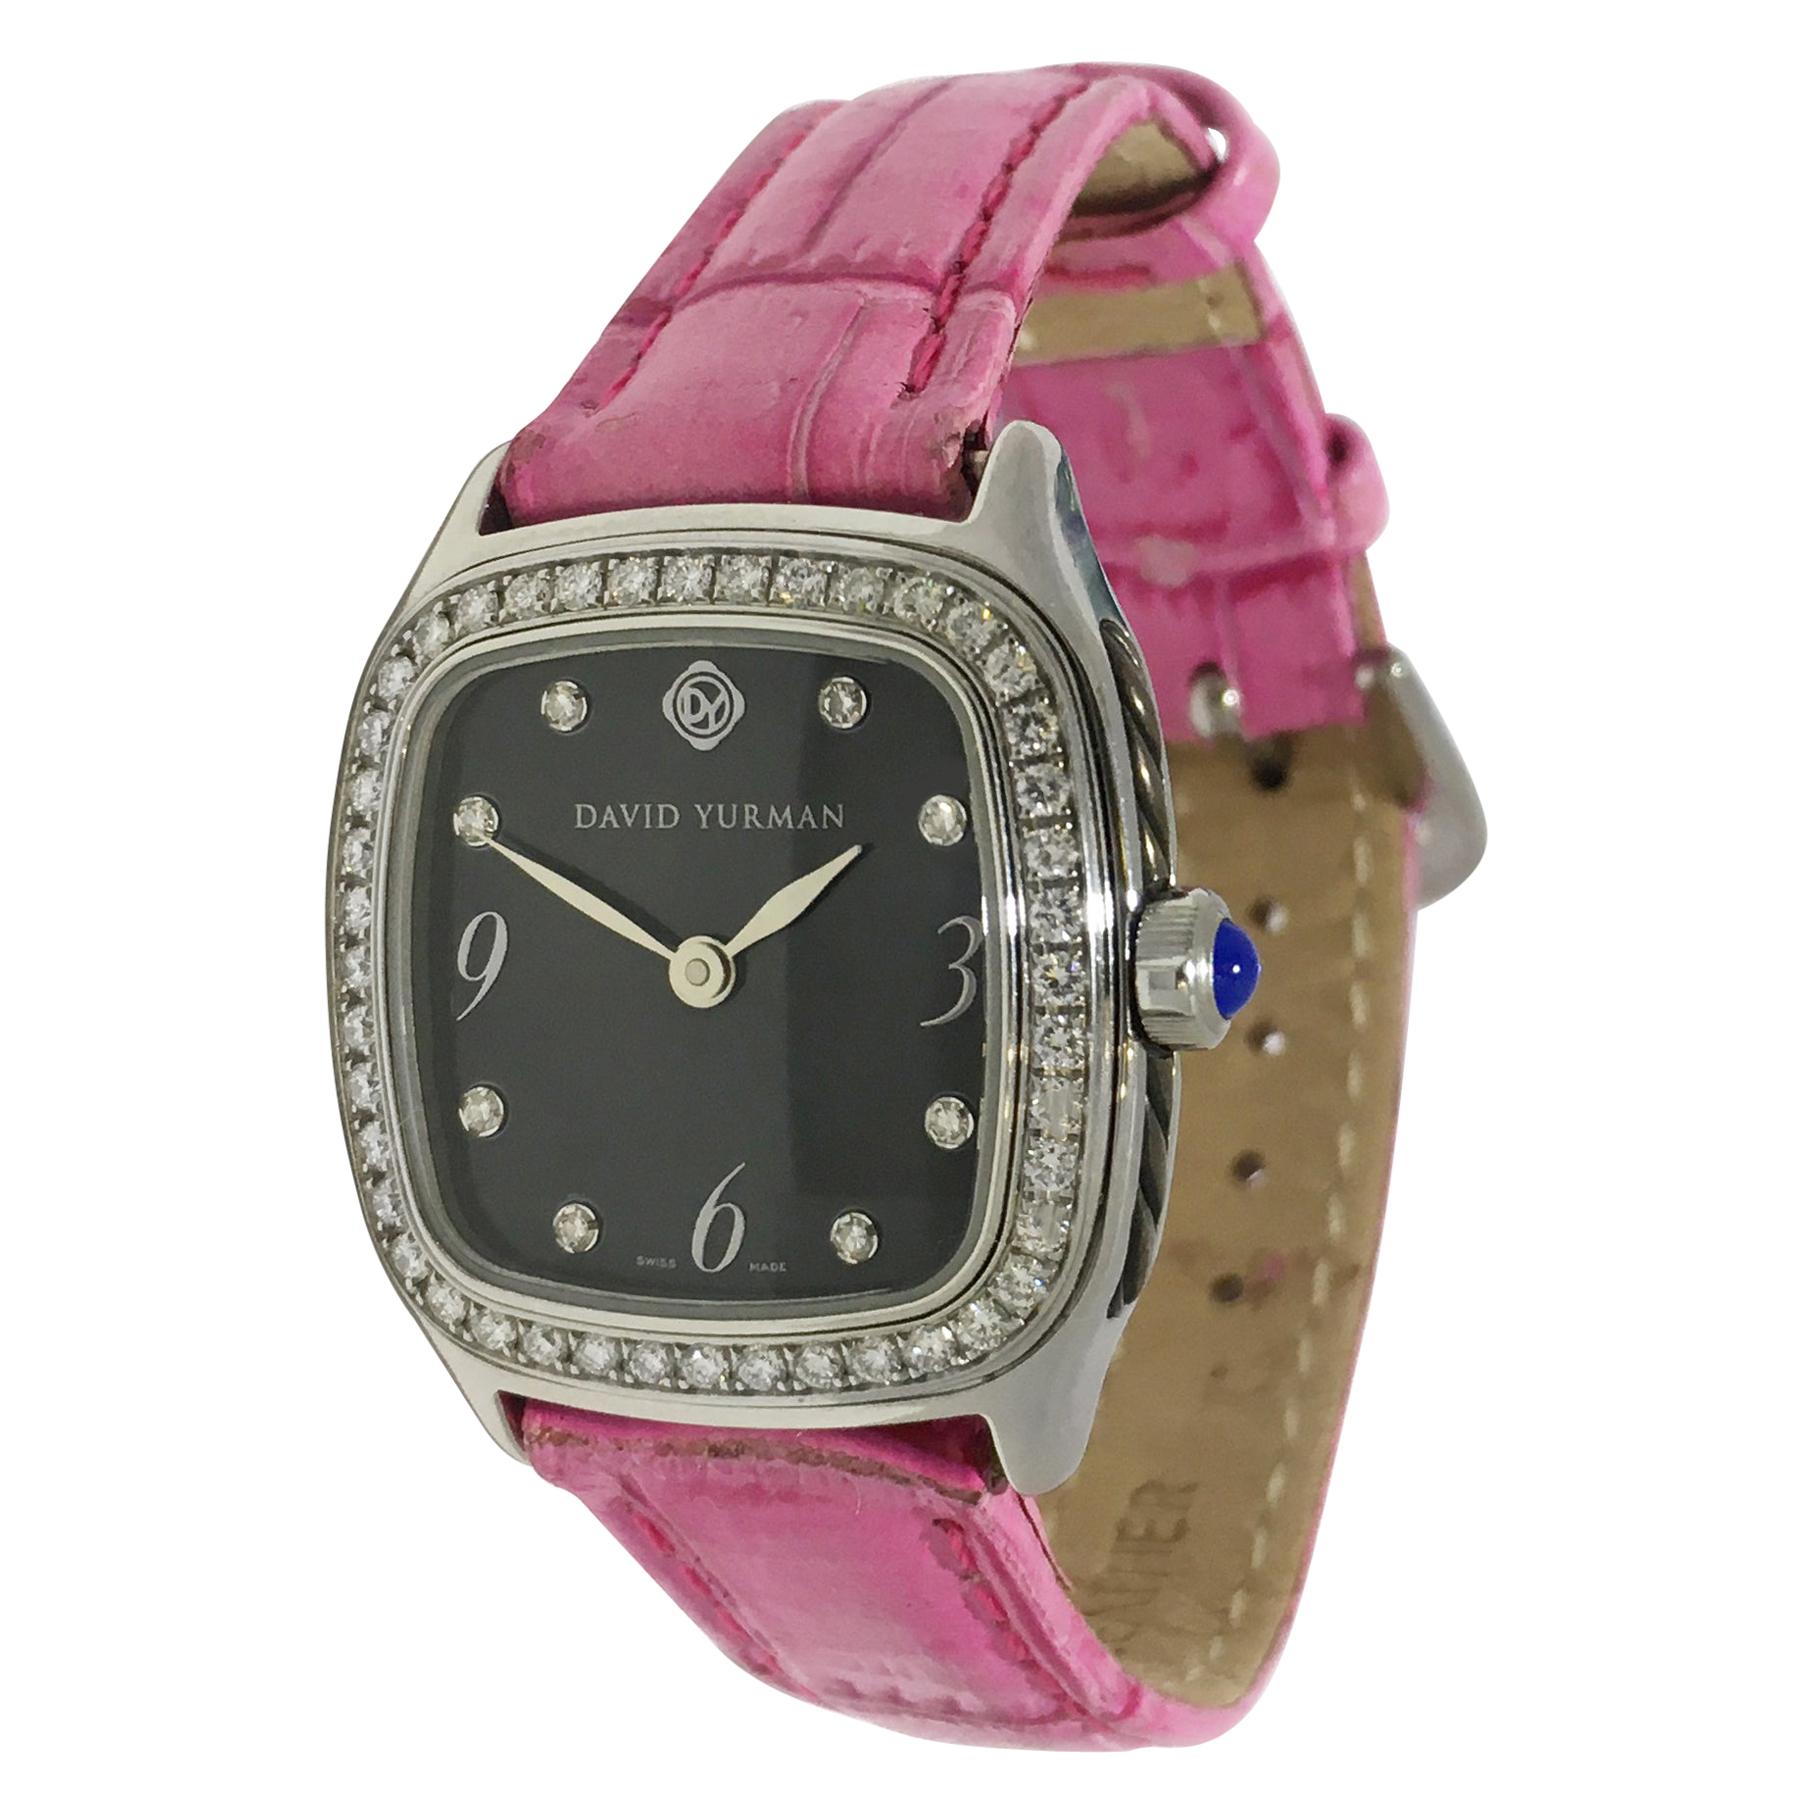 David Yurman Thoroughbred Women's Diamond Watch T304-XSST